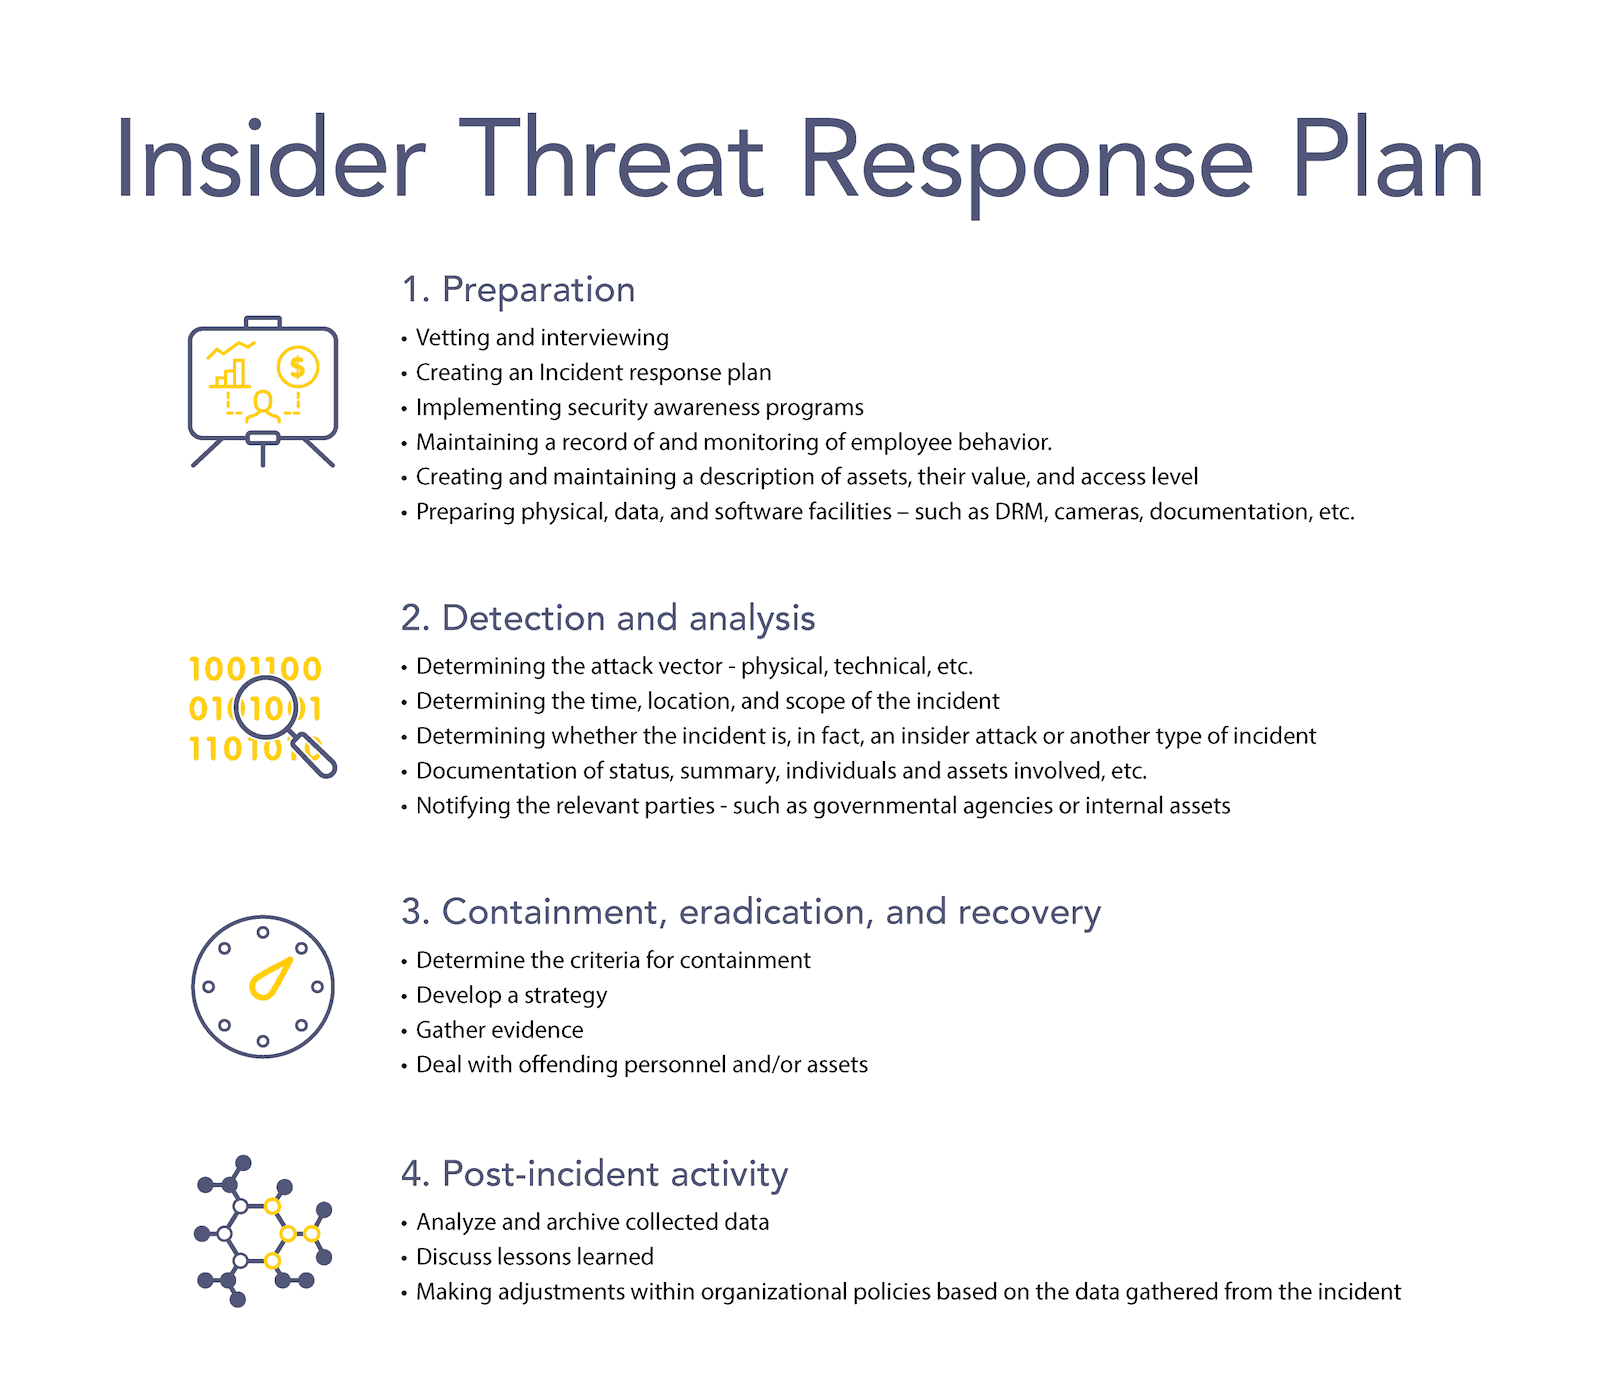 Insider threat response plan